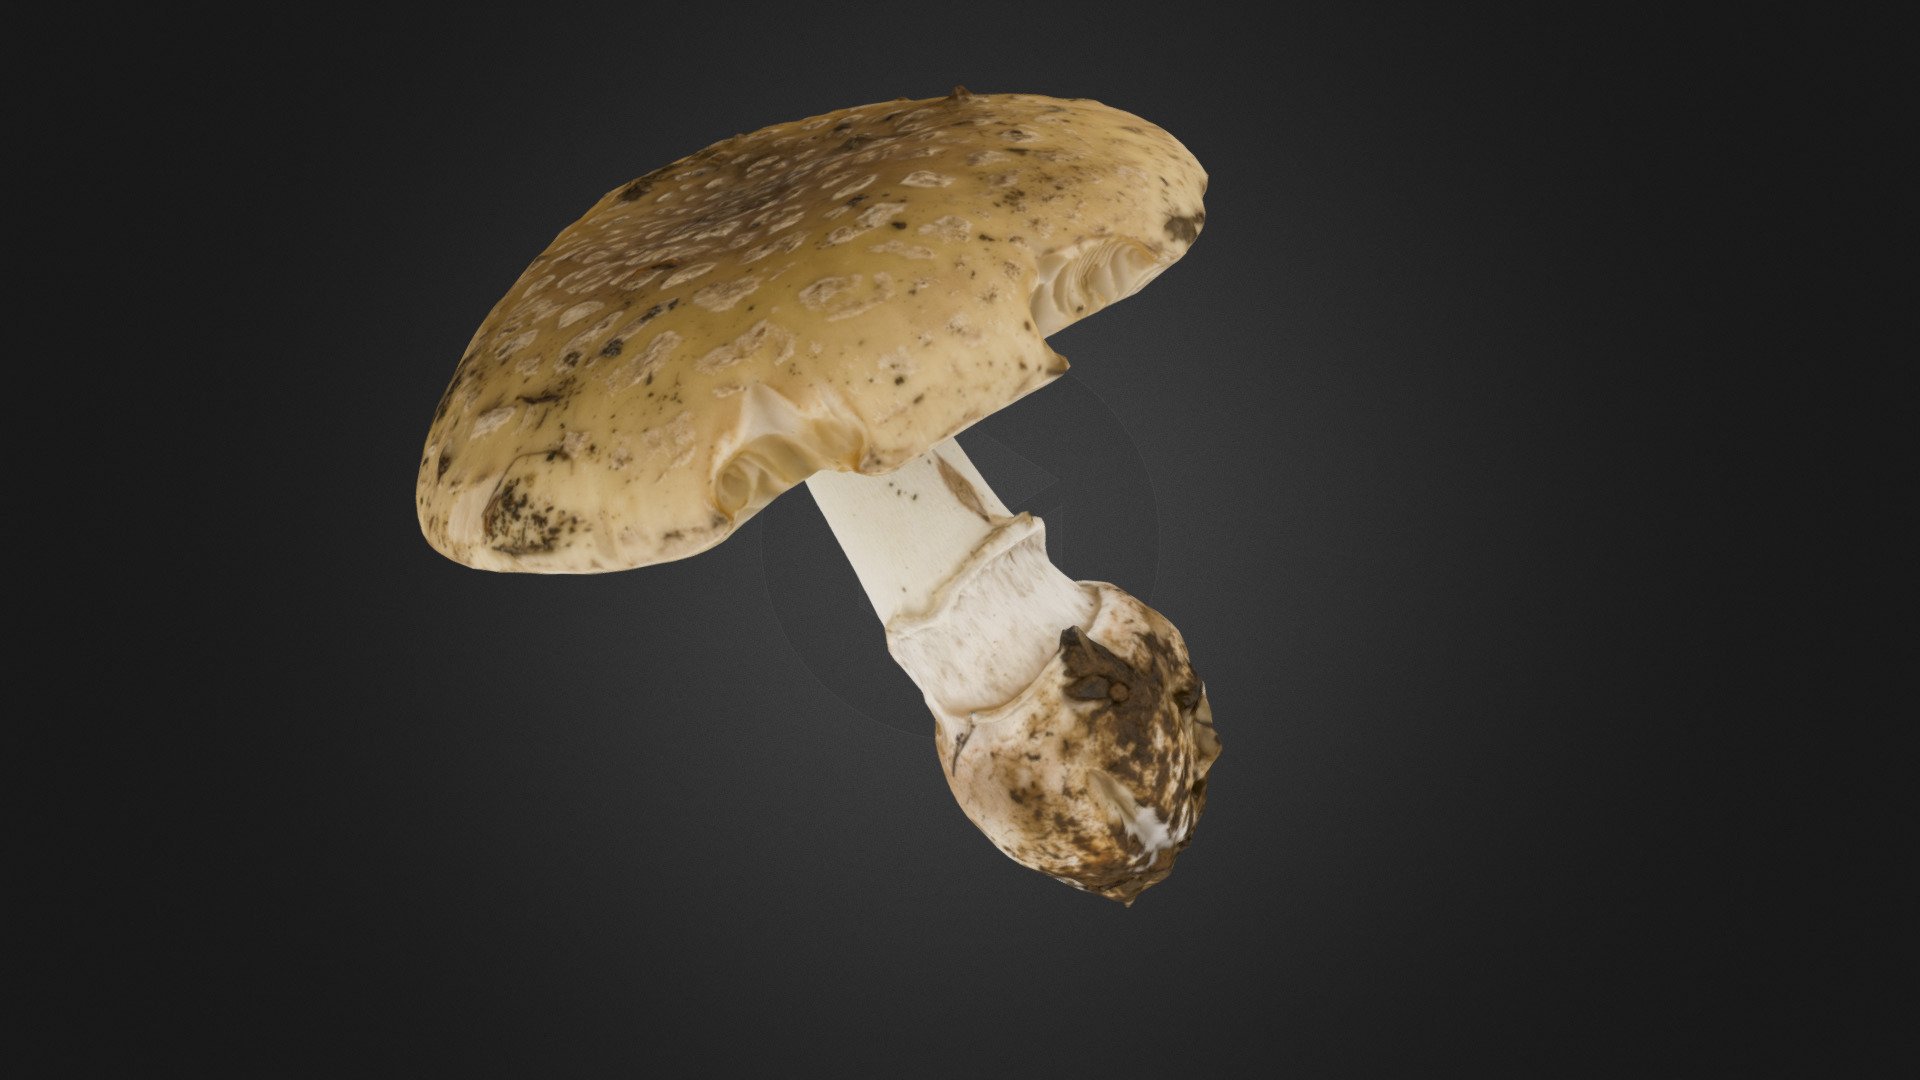 Amanita gemmata mushroom